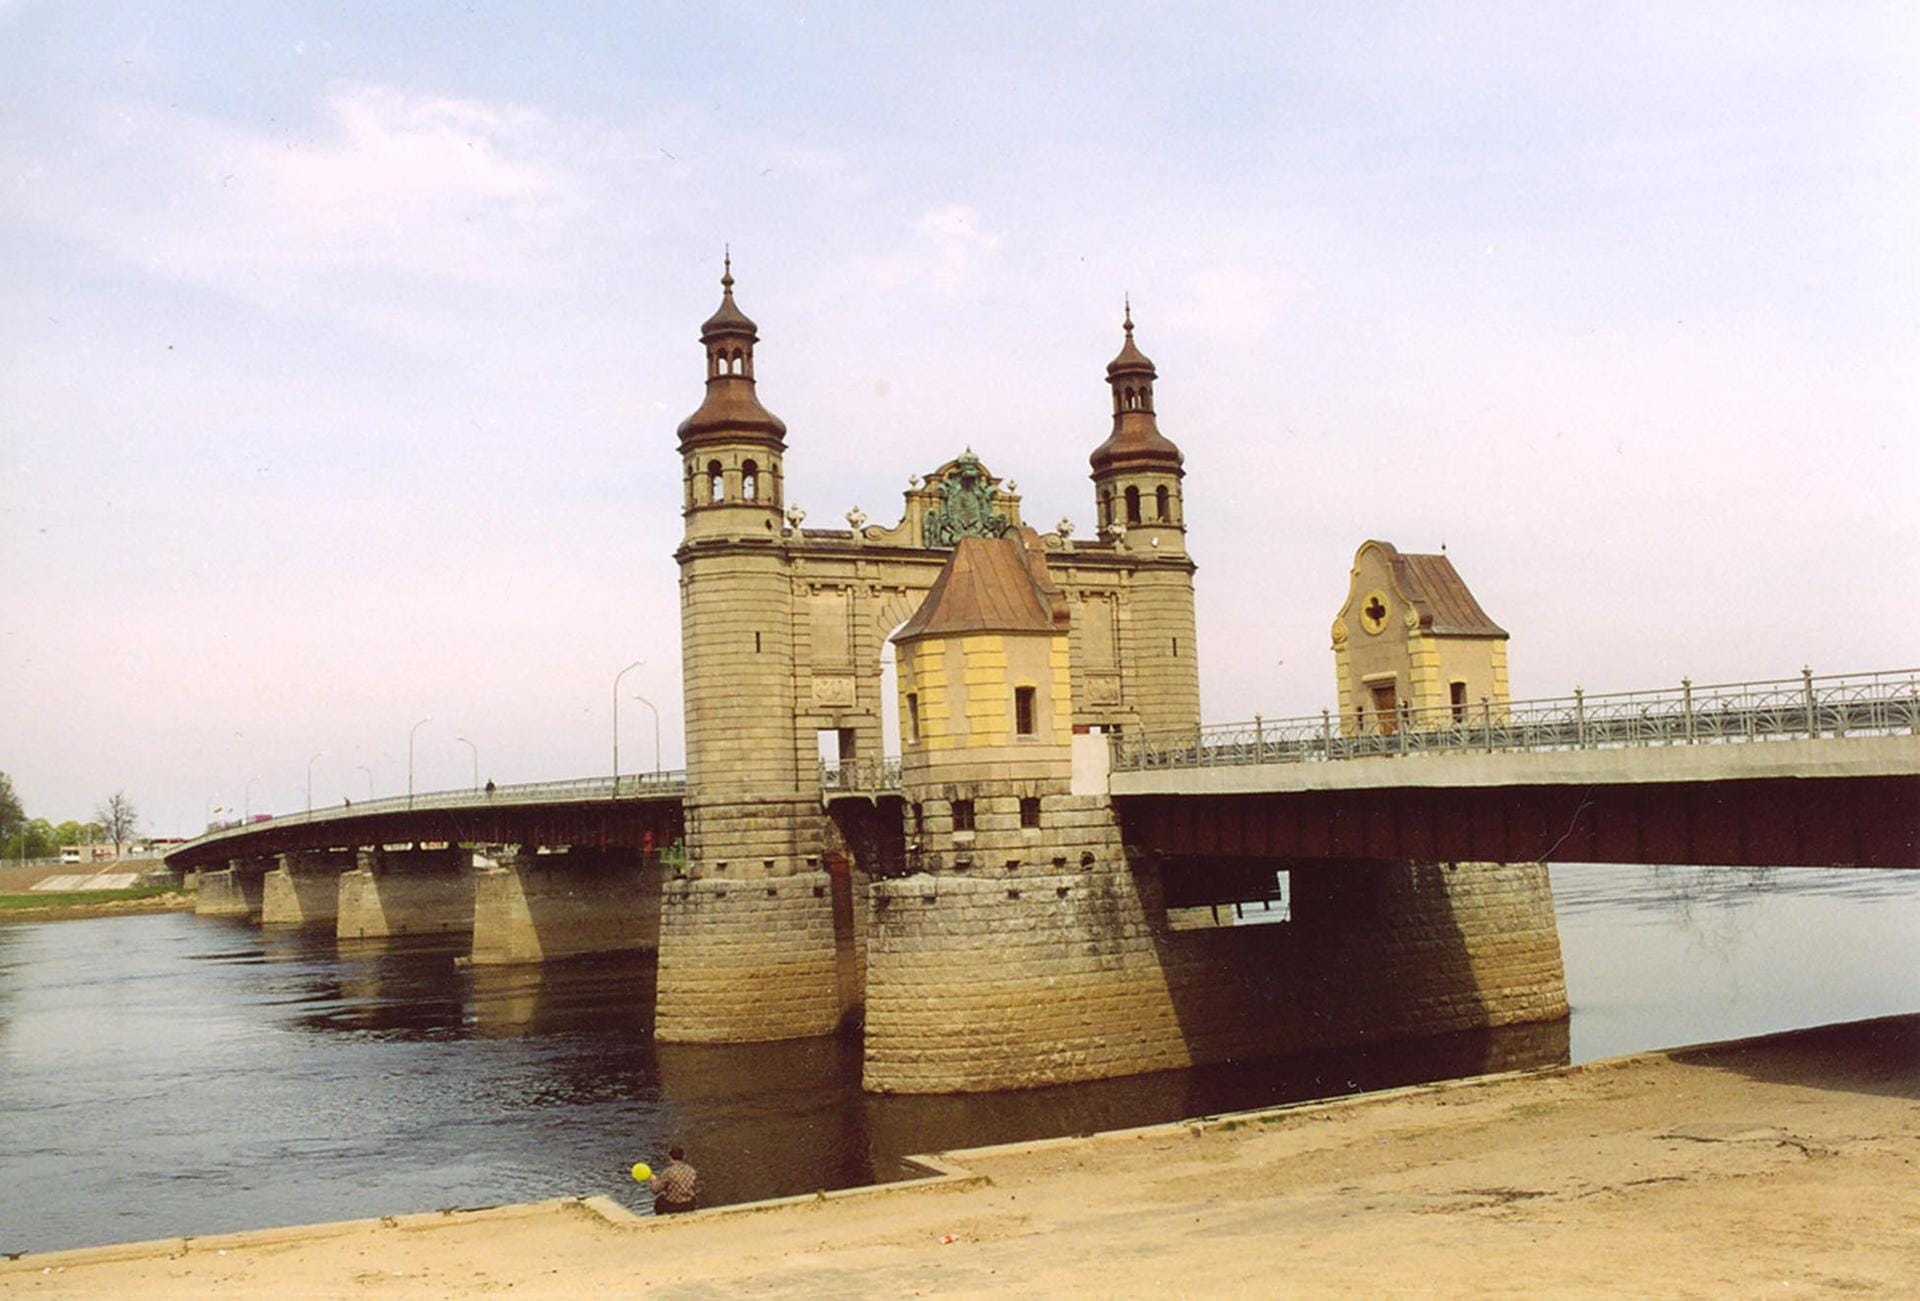 Königin-Luise-Brücke in Kaliningrad